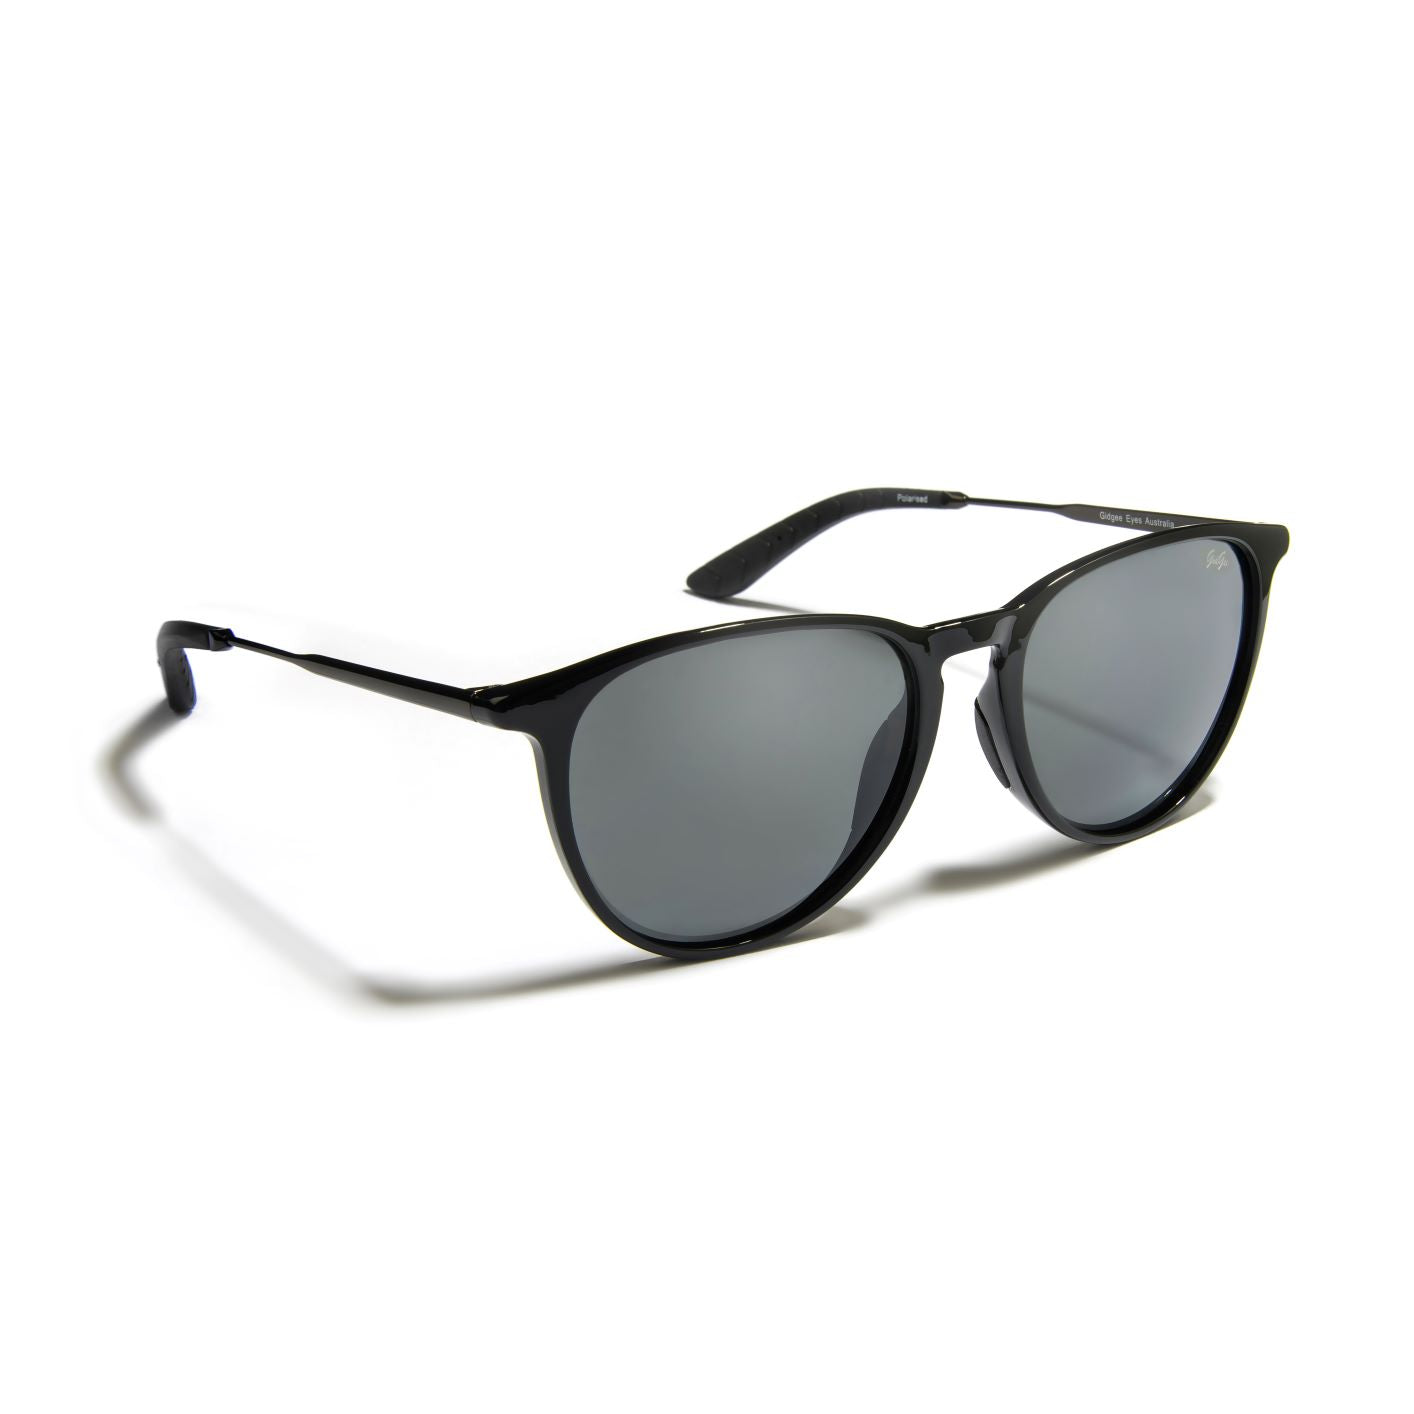 Gidgee Eyewear - Charisma Black Sunglasses